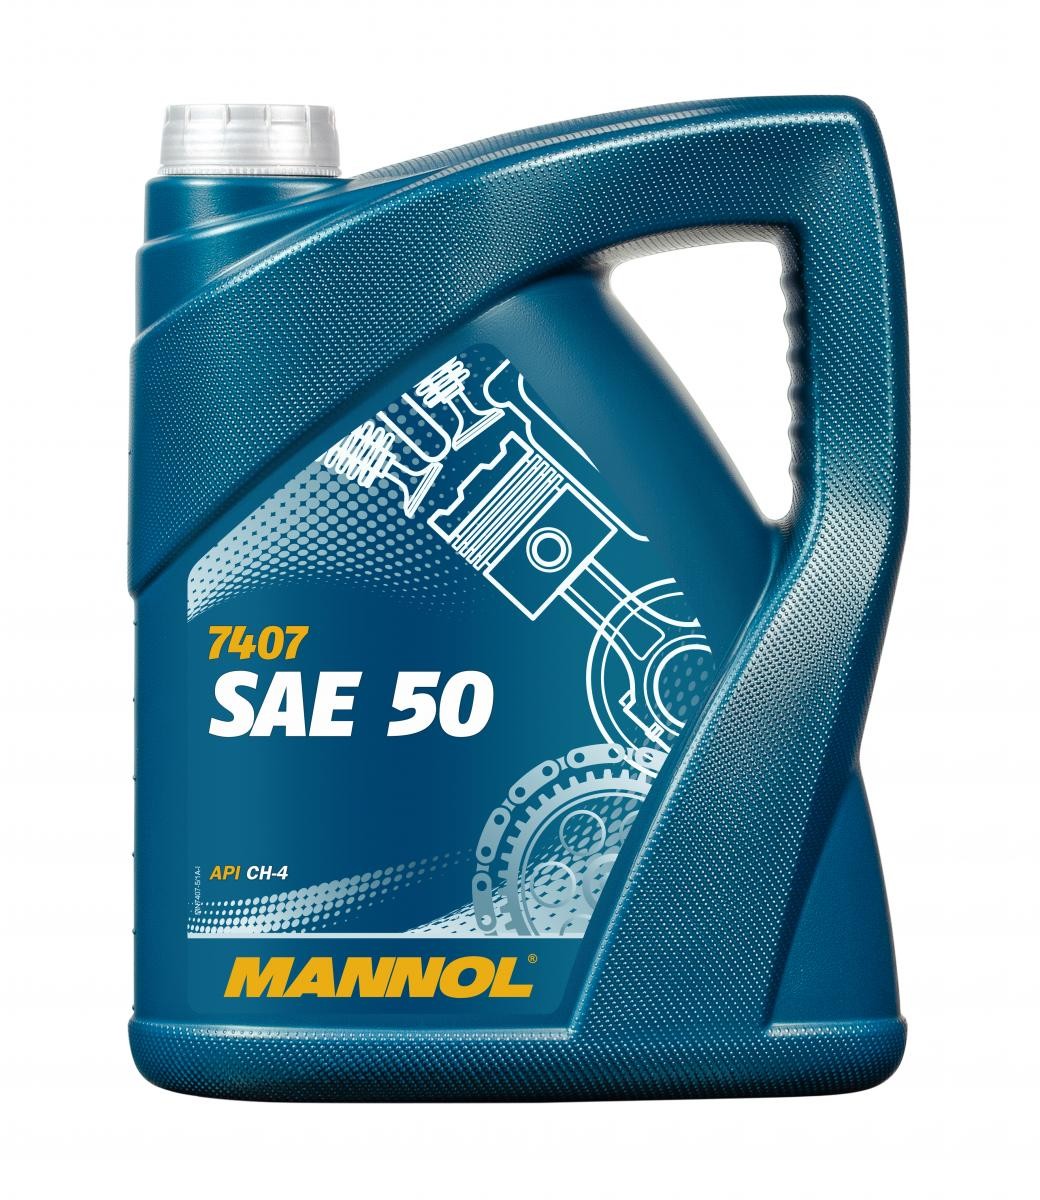 MANNOL SAE 50 MN74075 Multi-function Oil